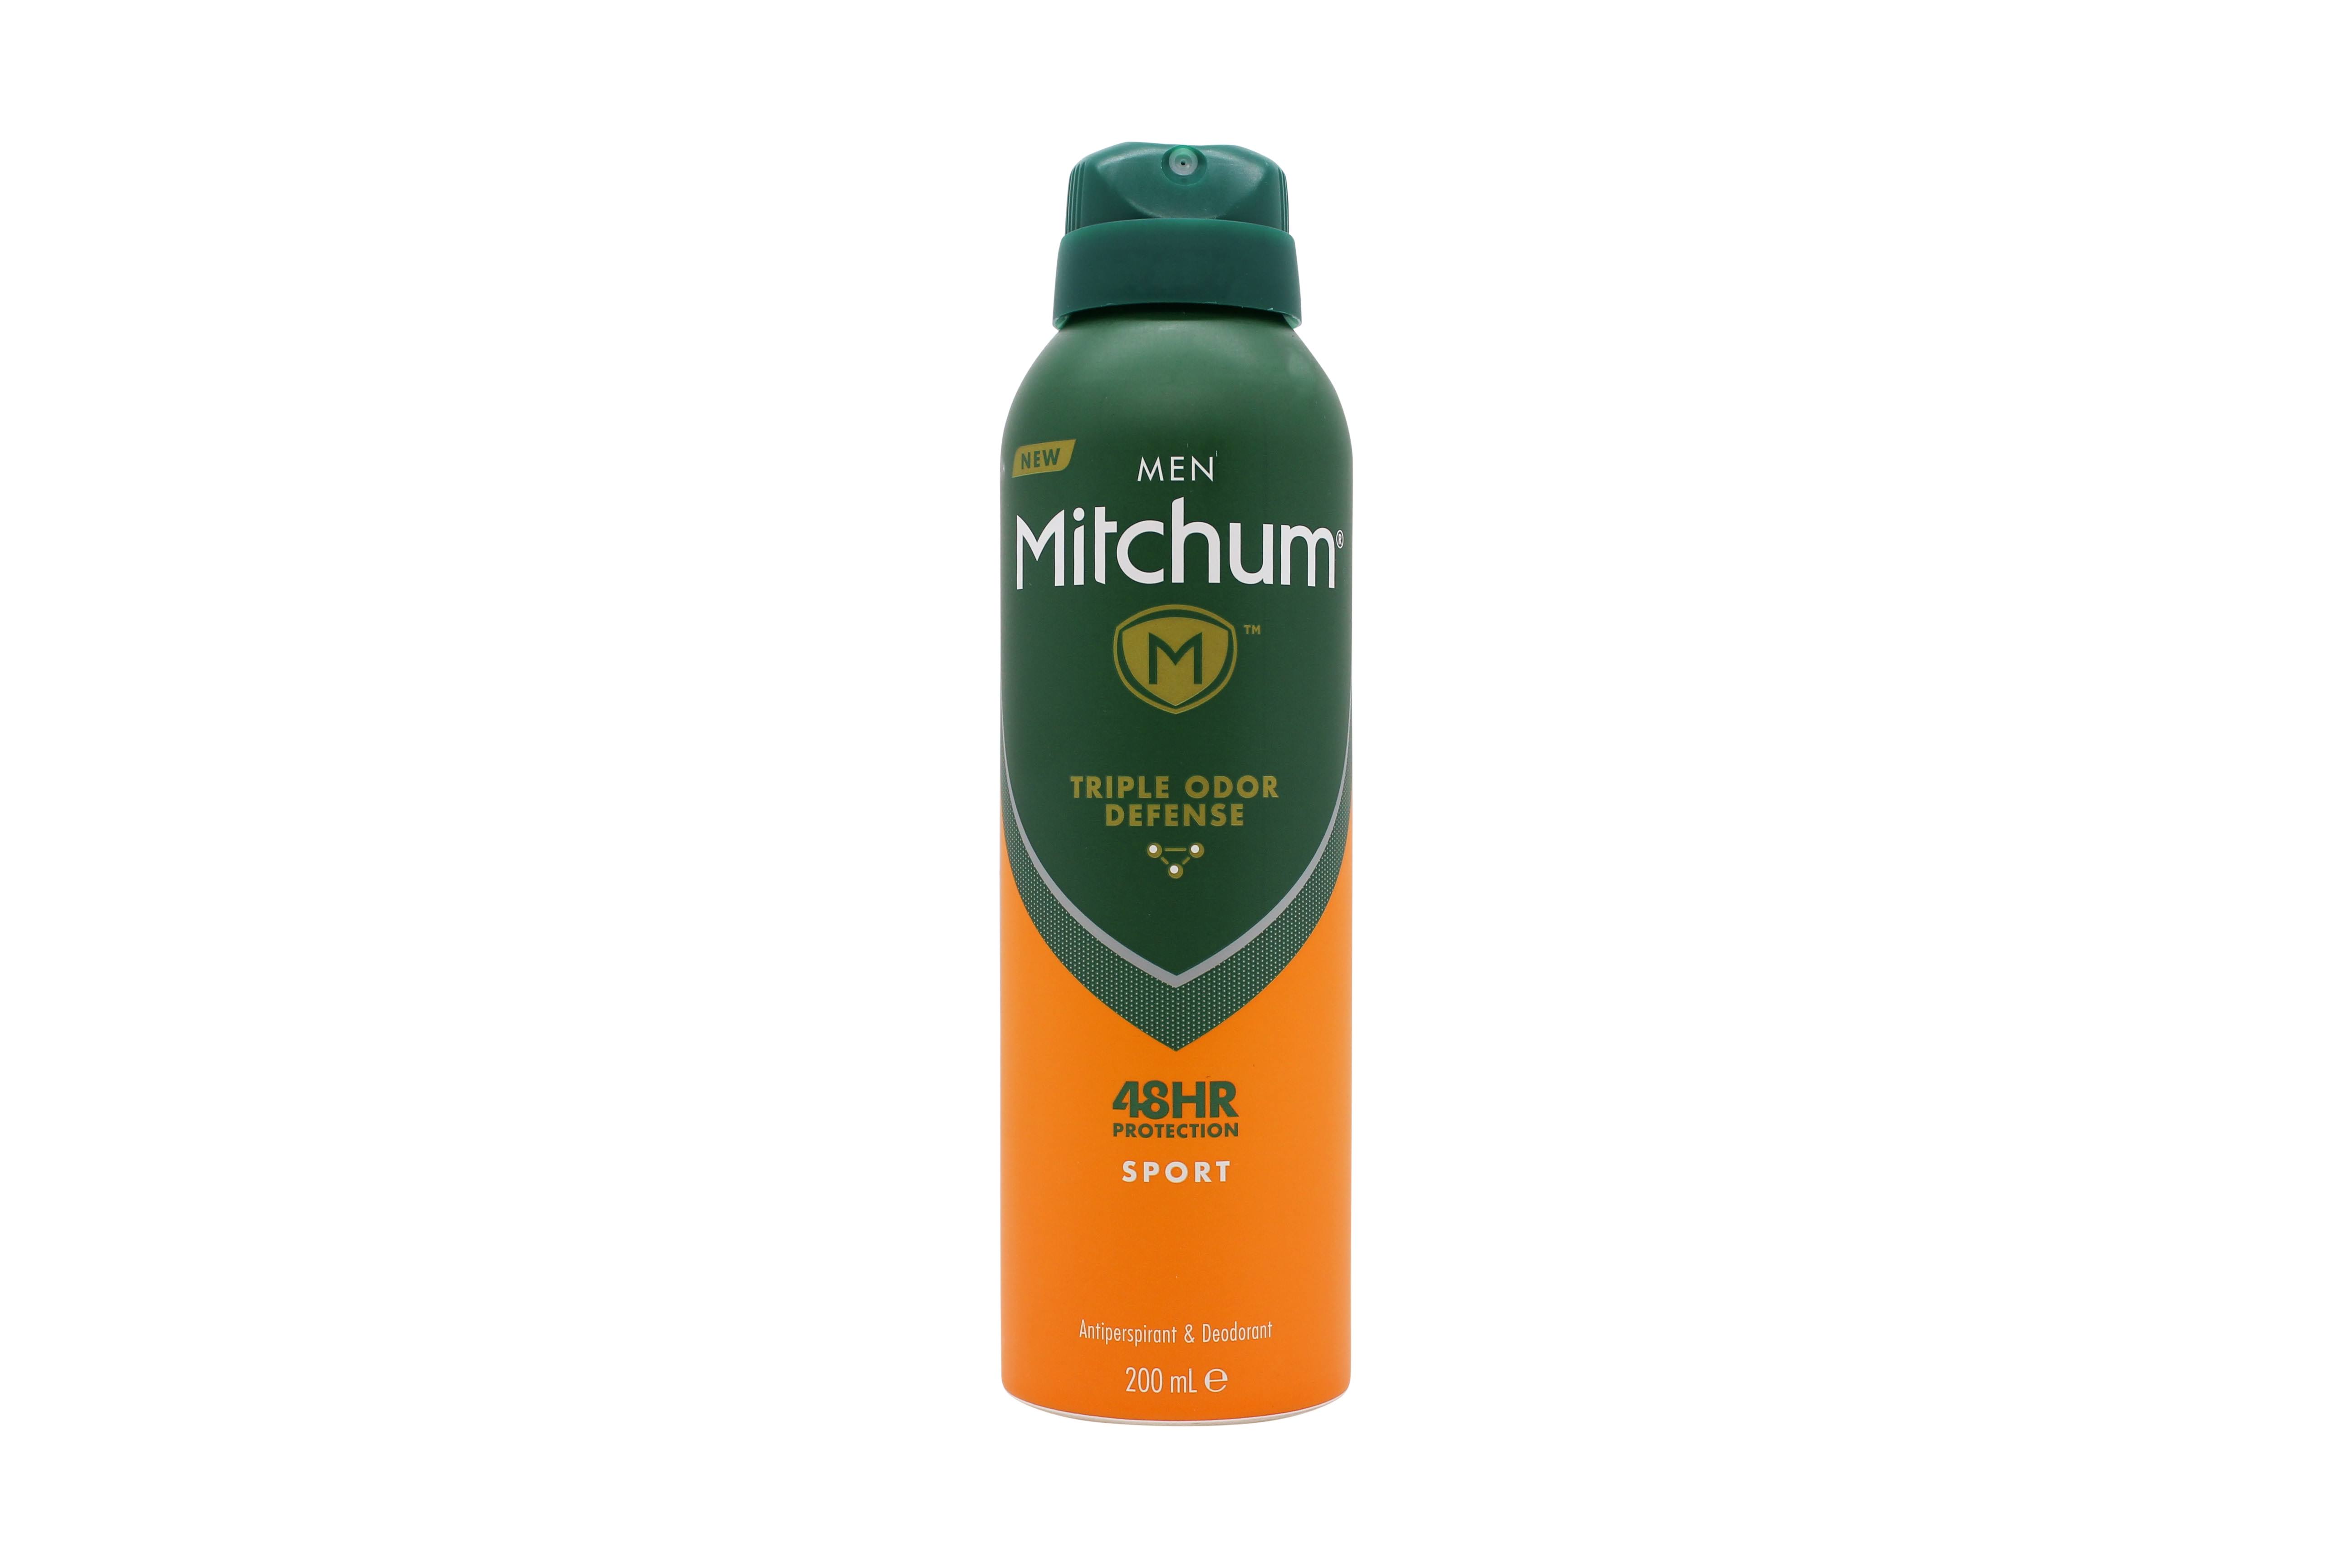 Mitchum Men Triple Odor Defense 48hr Protection Antiperspirant and Deodorant - Sport, 200ml